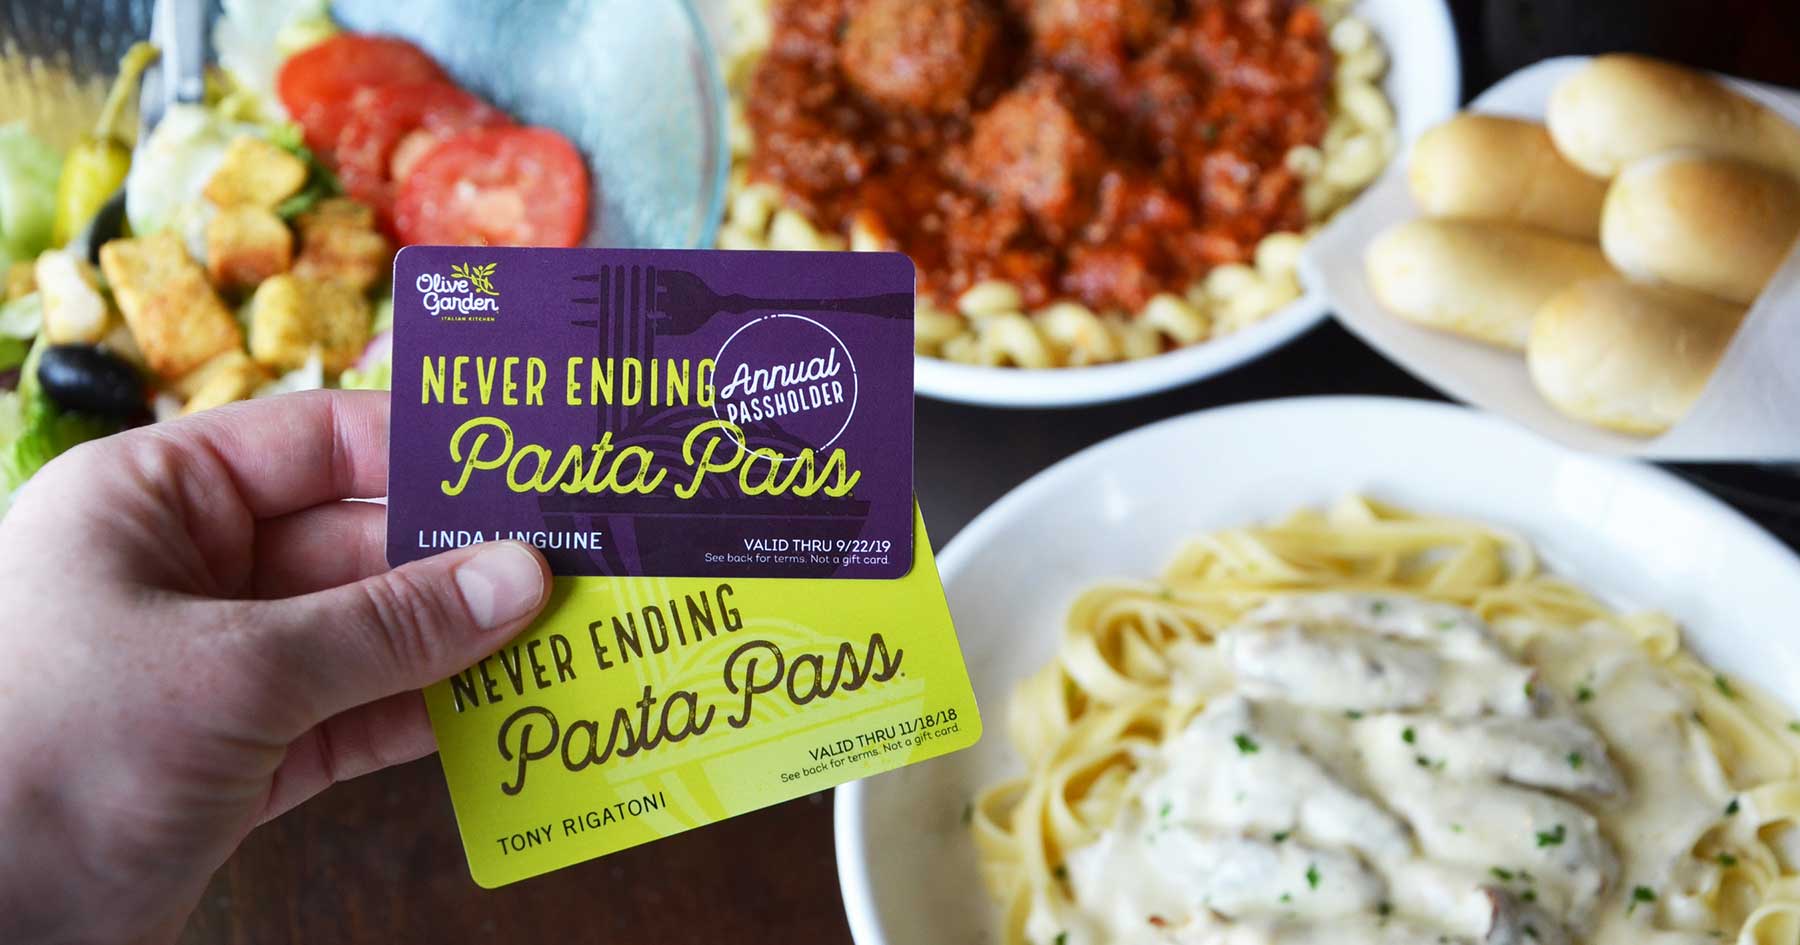 Olive Garden hints at end of Never-Ending Pasta Bowl